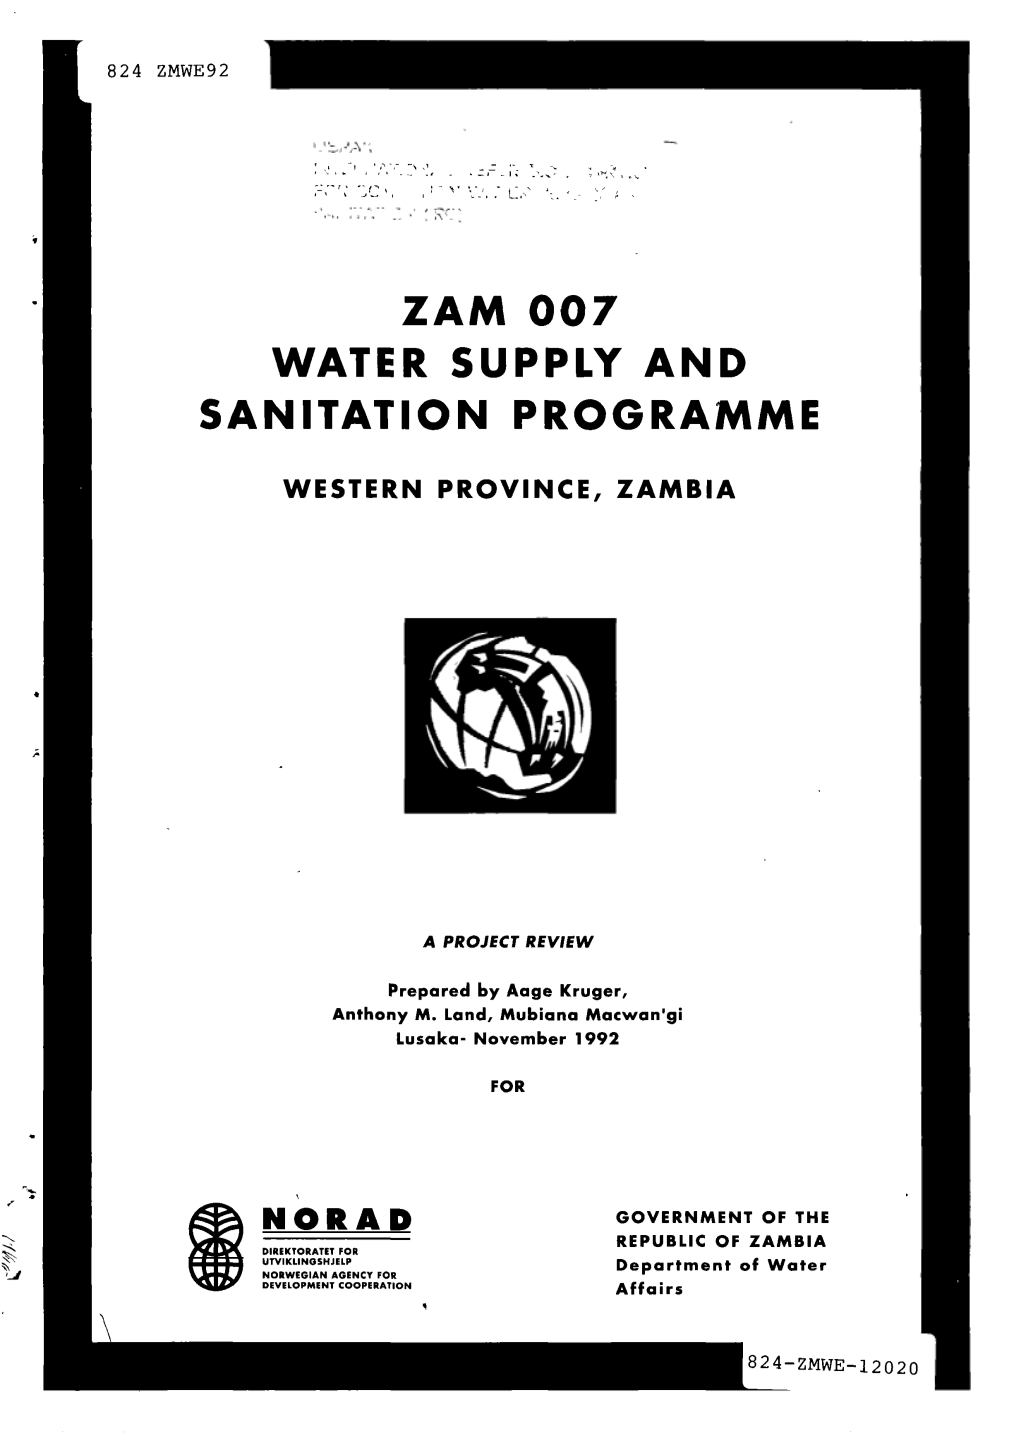 Zam 007 Water Supply and Sanitation Programme